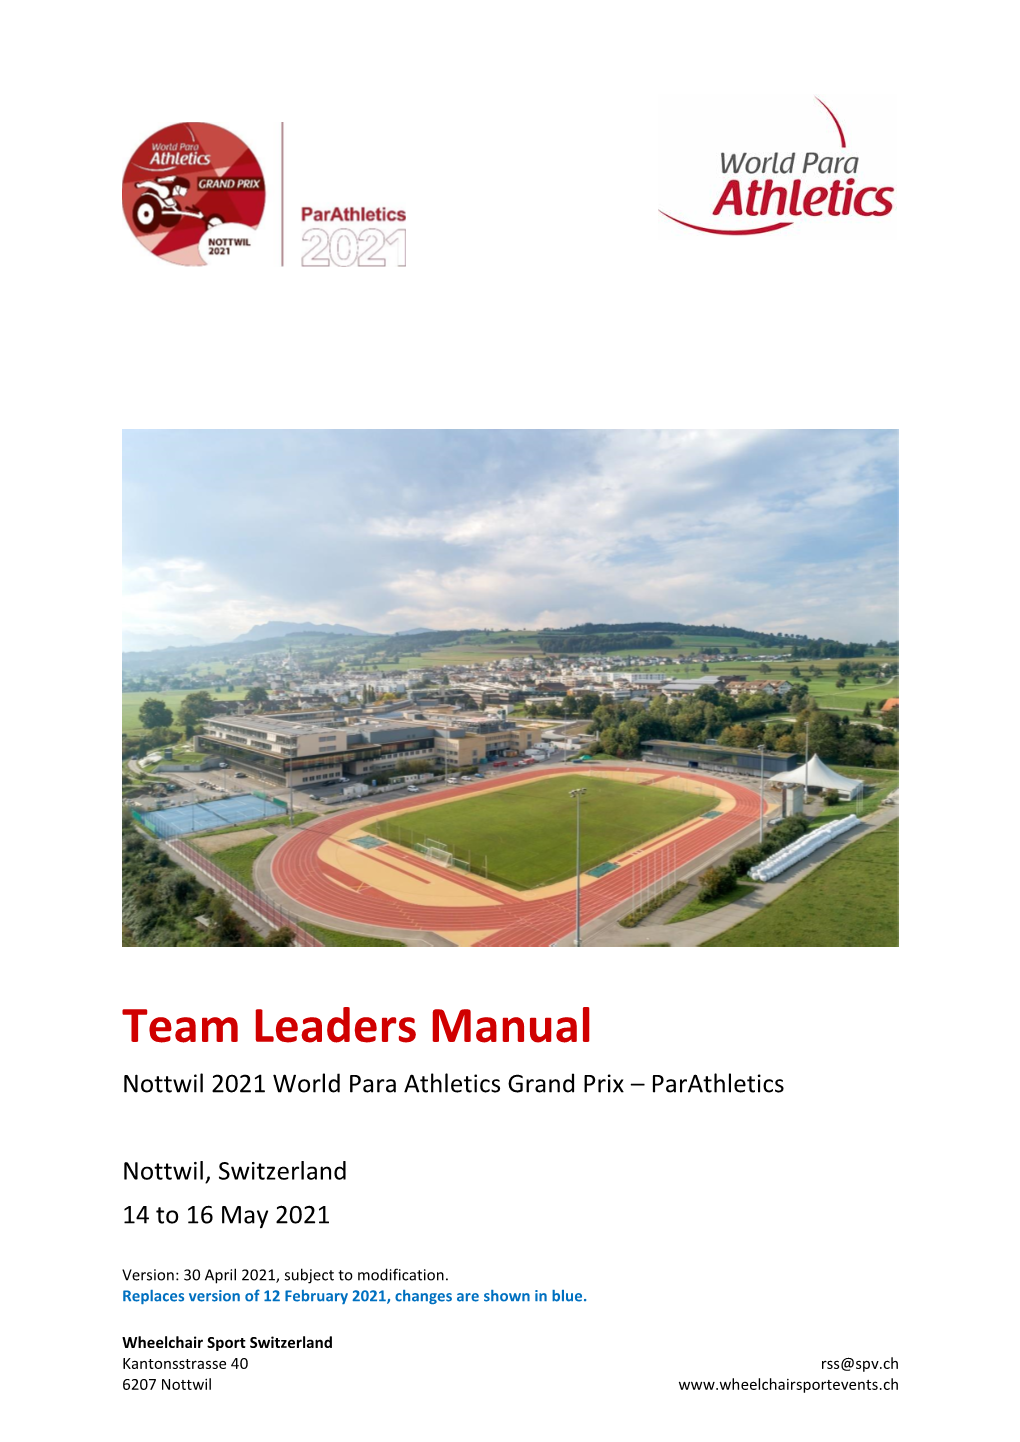 Team Leaders Manual Nottwil 2021 World Para Athletics Grand Prix – Parathletics